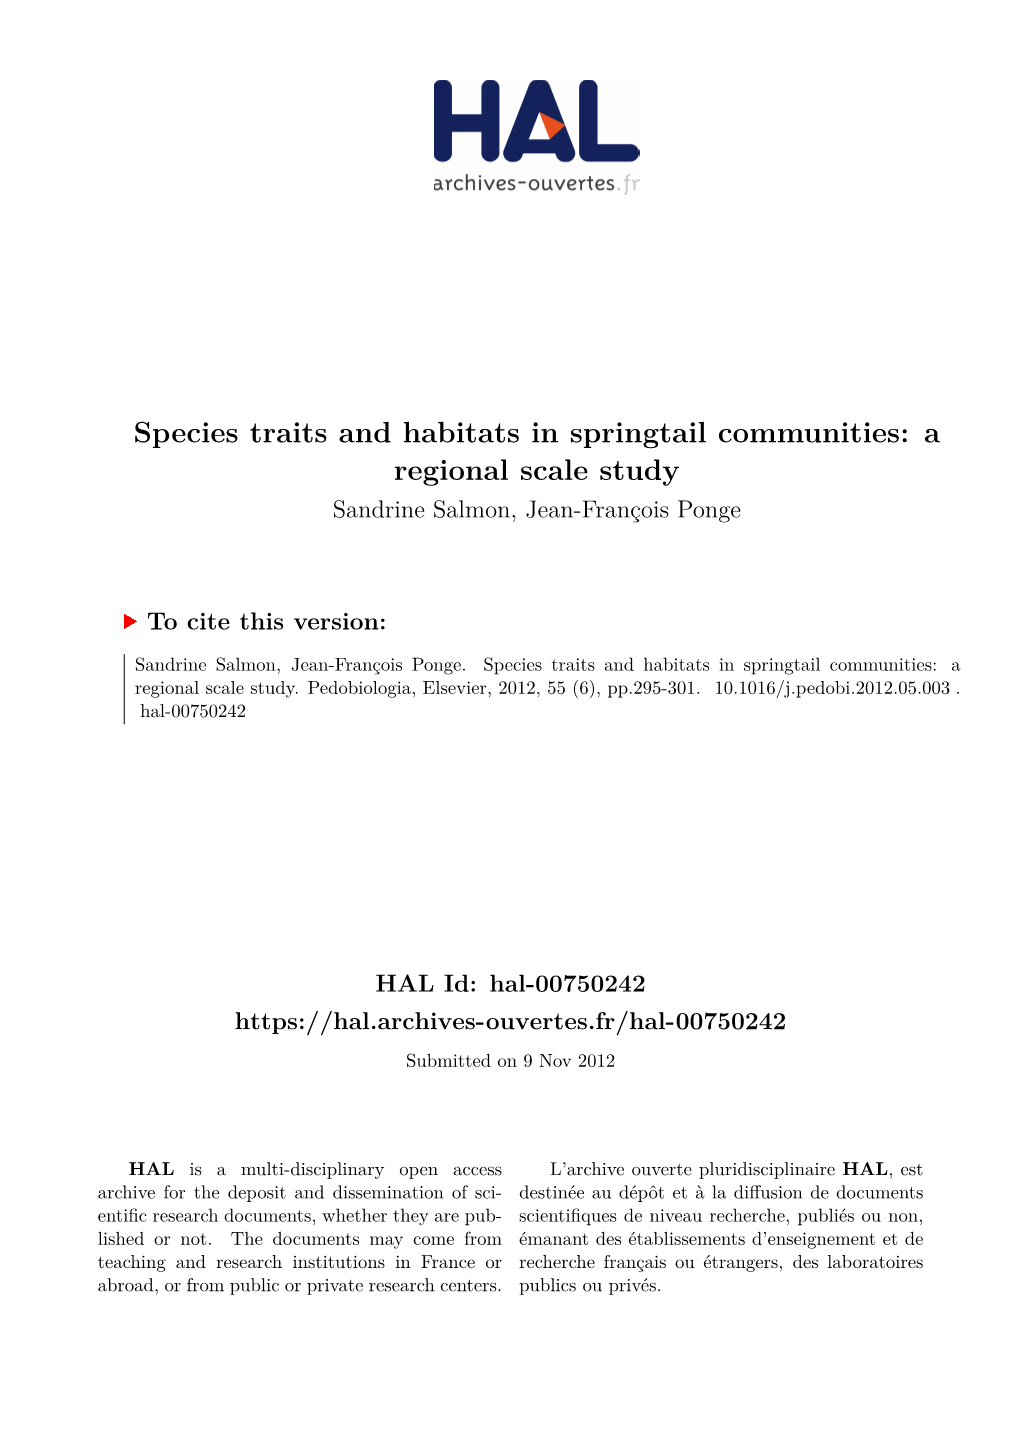 Species Traits and Habitats in Springtail Communities: a Regional Scale Study Sandrine Salmon, Jean-François Ponge